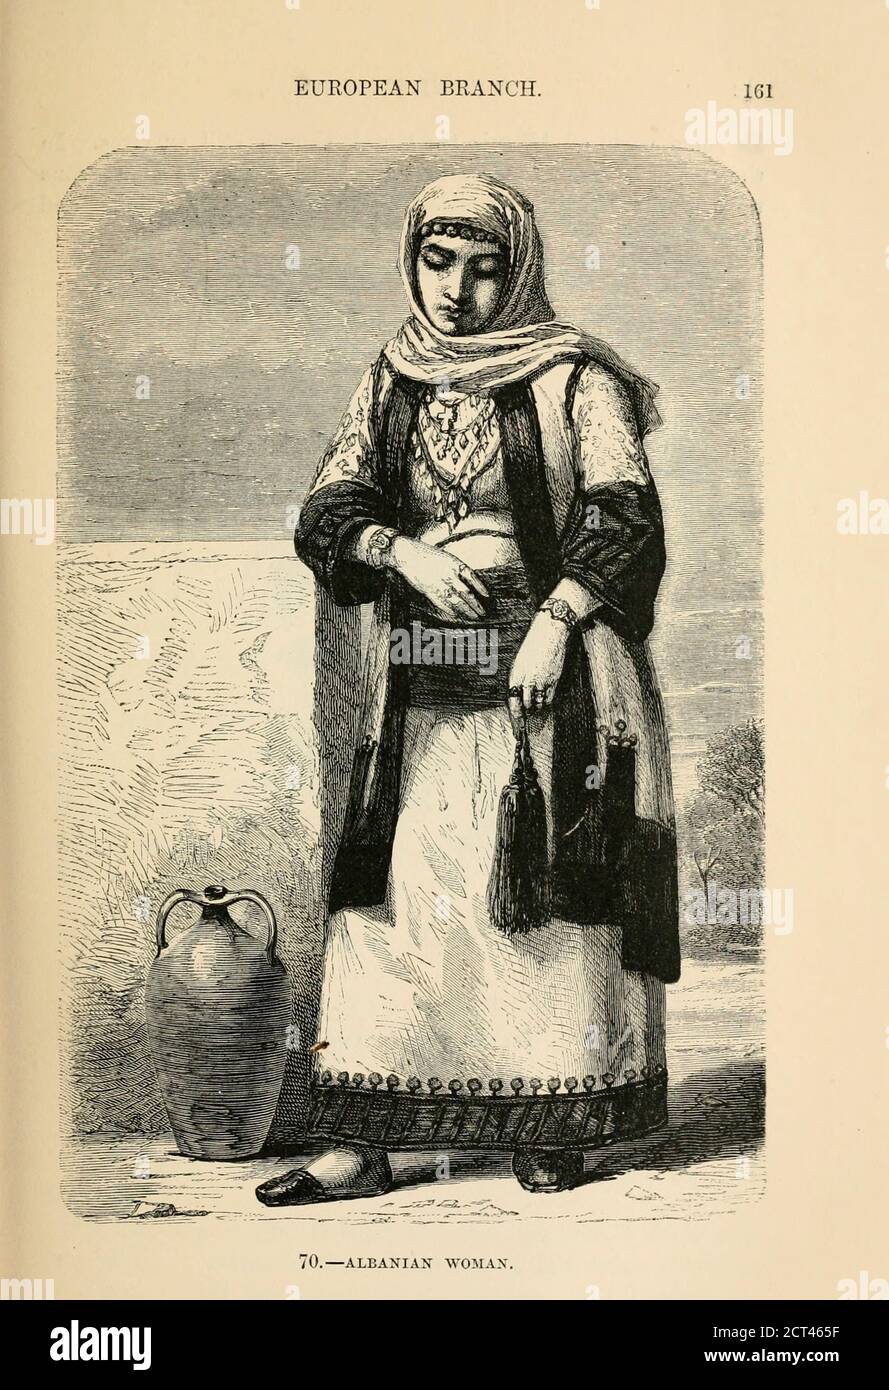 Albanian Woman Engraving on wood from the human race von Figuier, Louis, (1819-1894) Publikation im Jahr 1872 Verlag: New York, Appleton Stockfoto